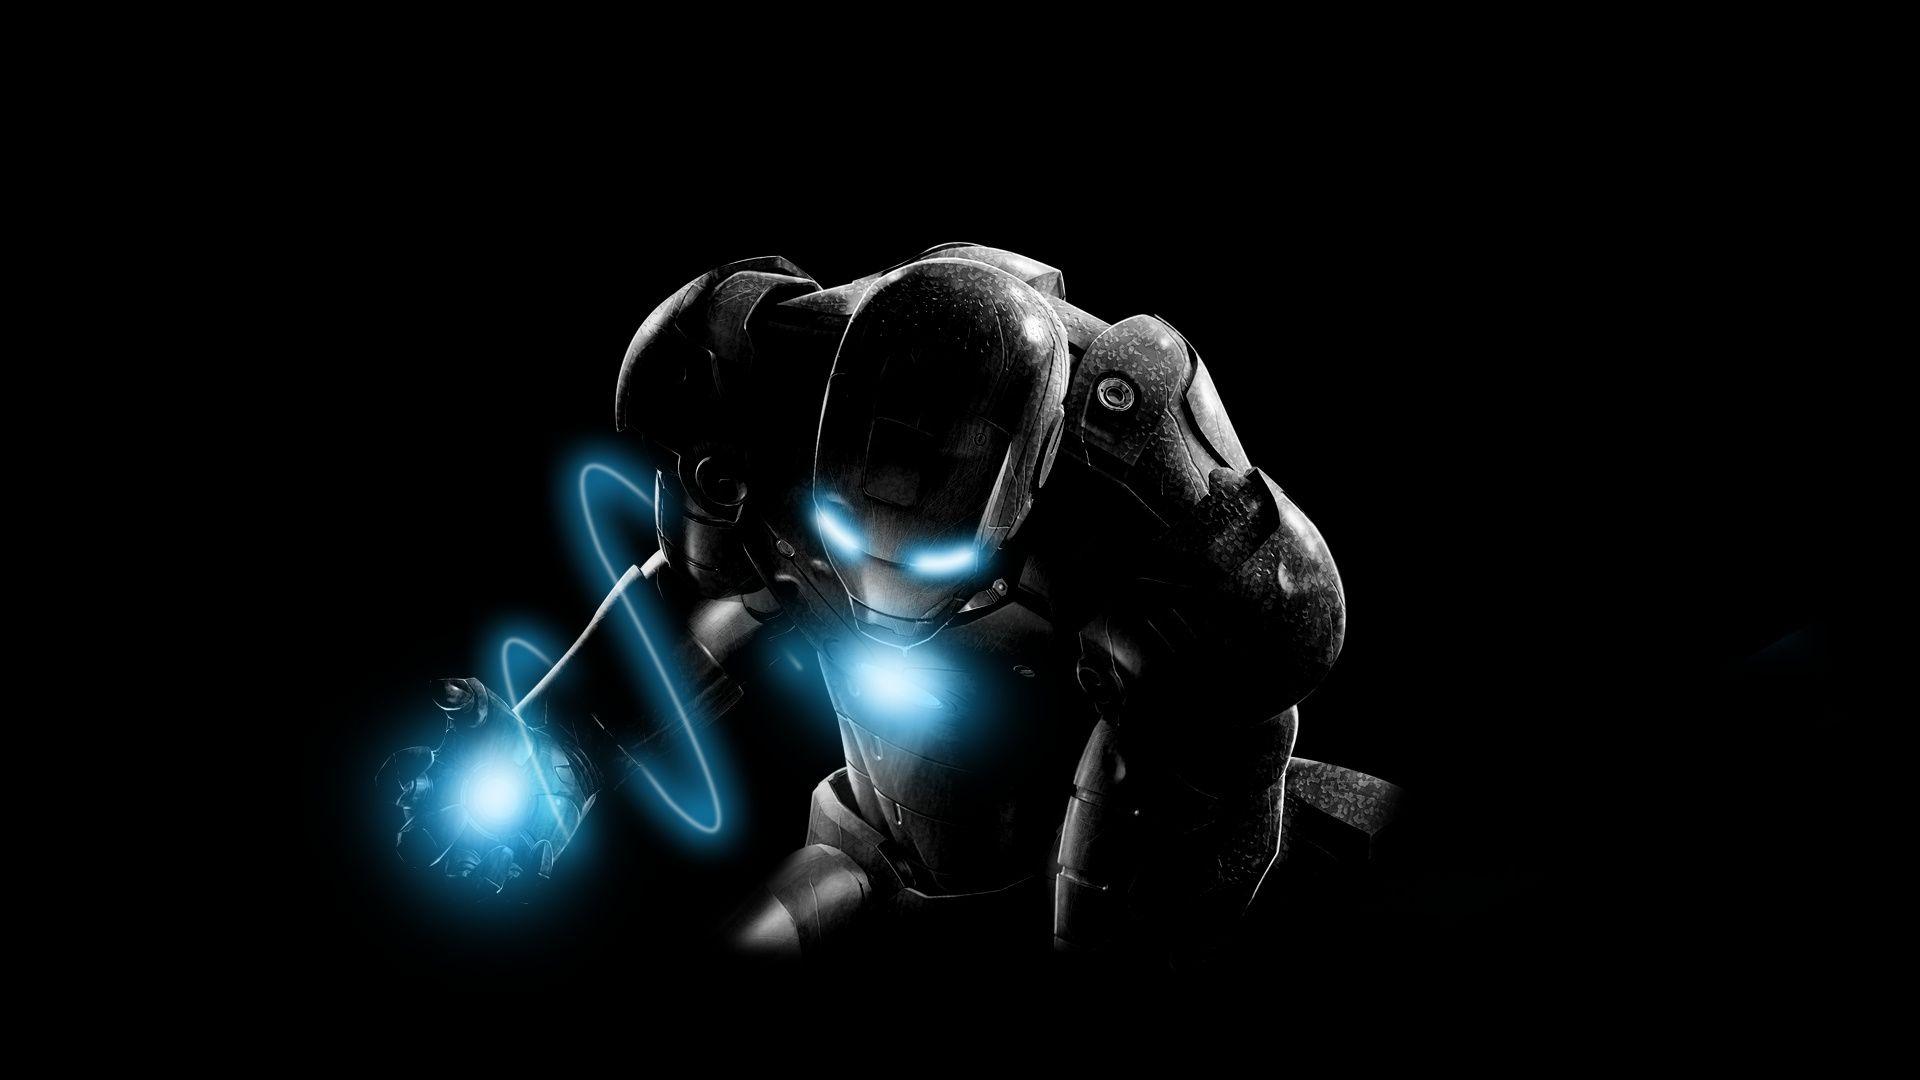 Wallpaper.wiki Image Iron Man In The Dark Download PIC WPD009374